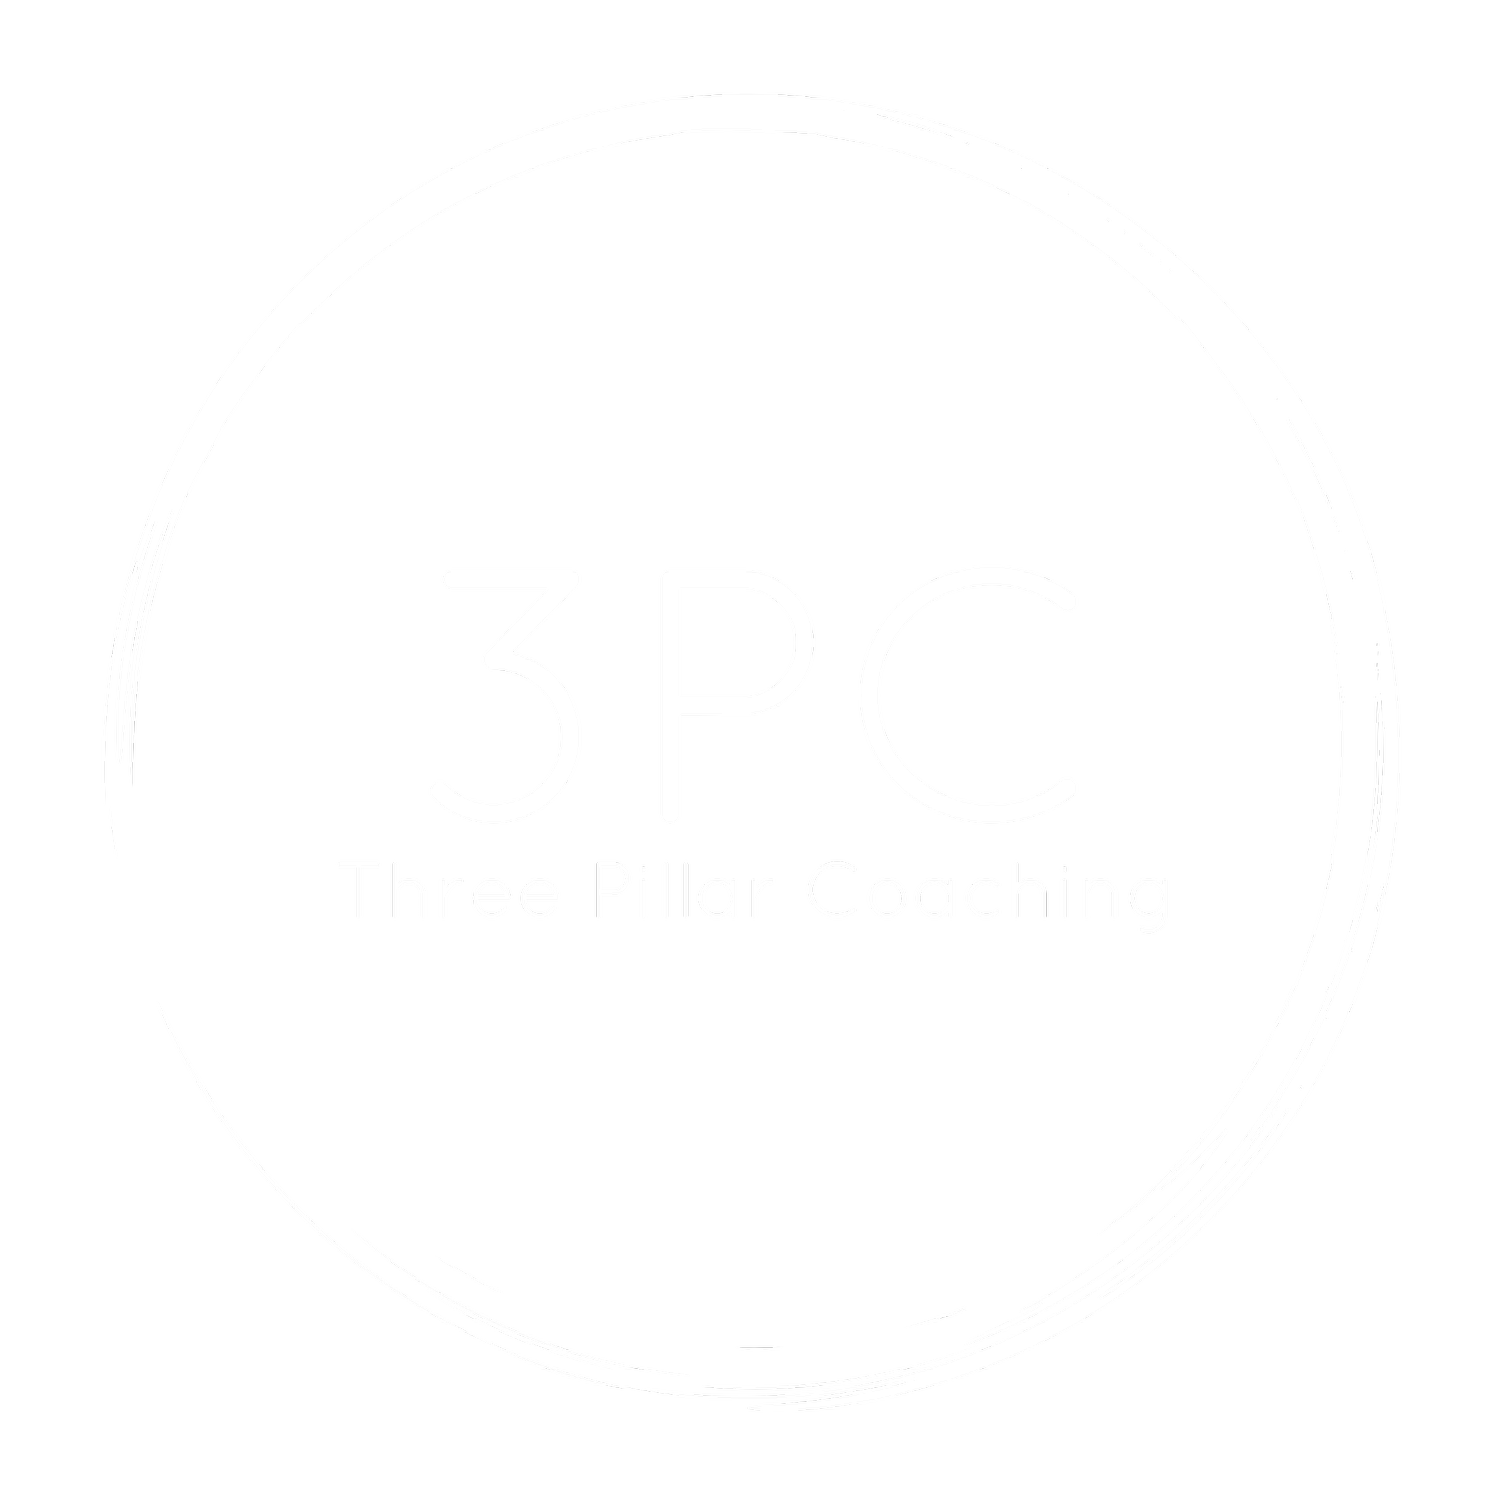 Three Pillar Coaching